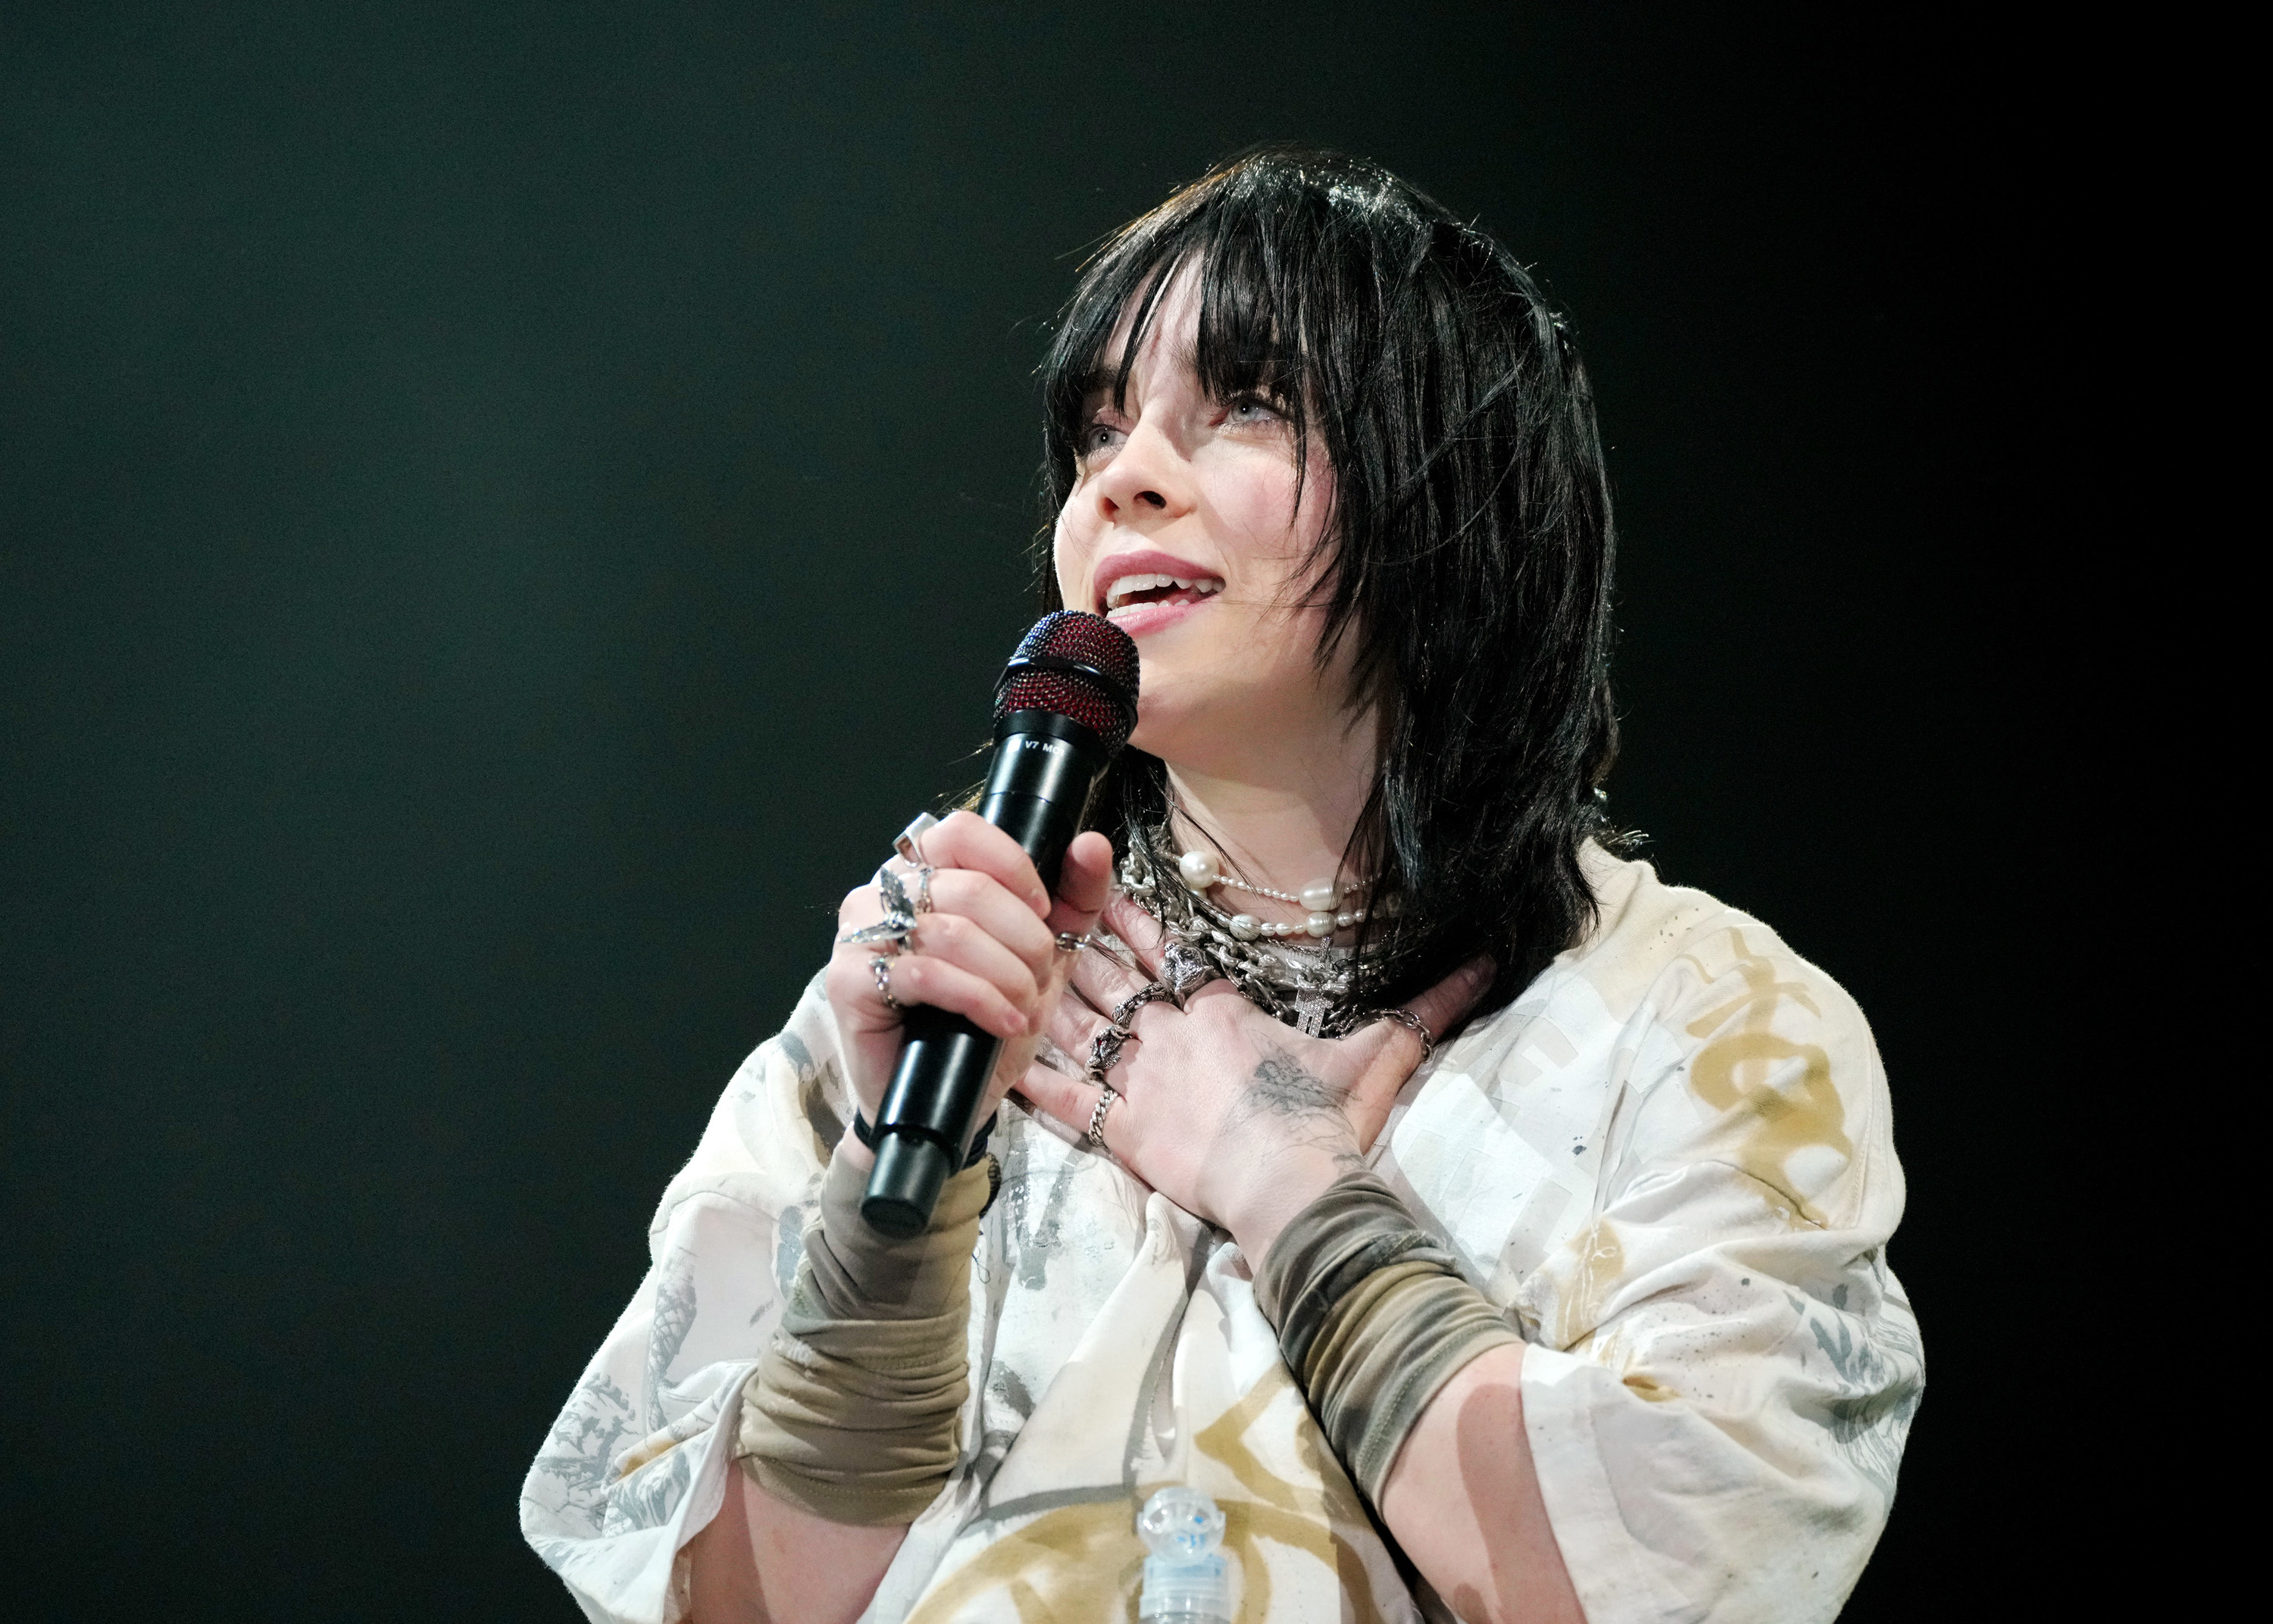 A closeup of Billie performing